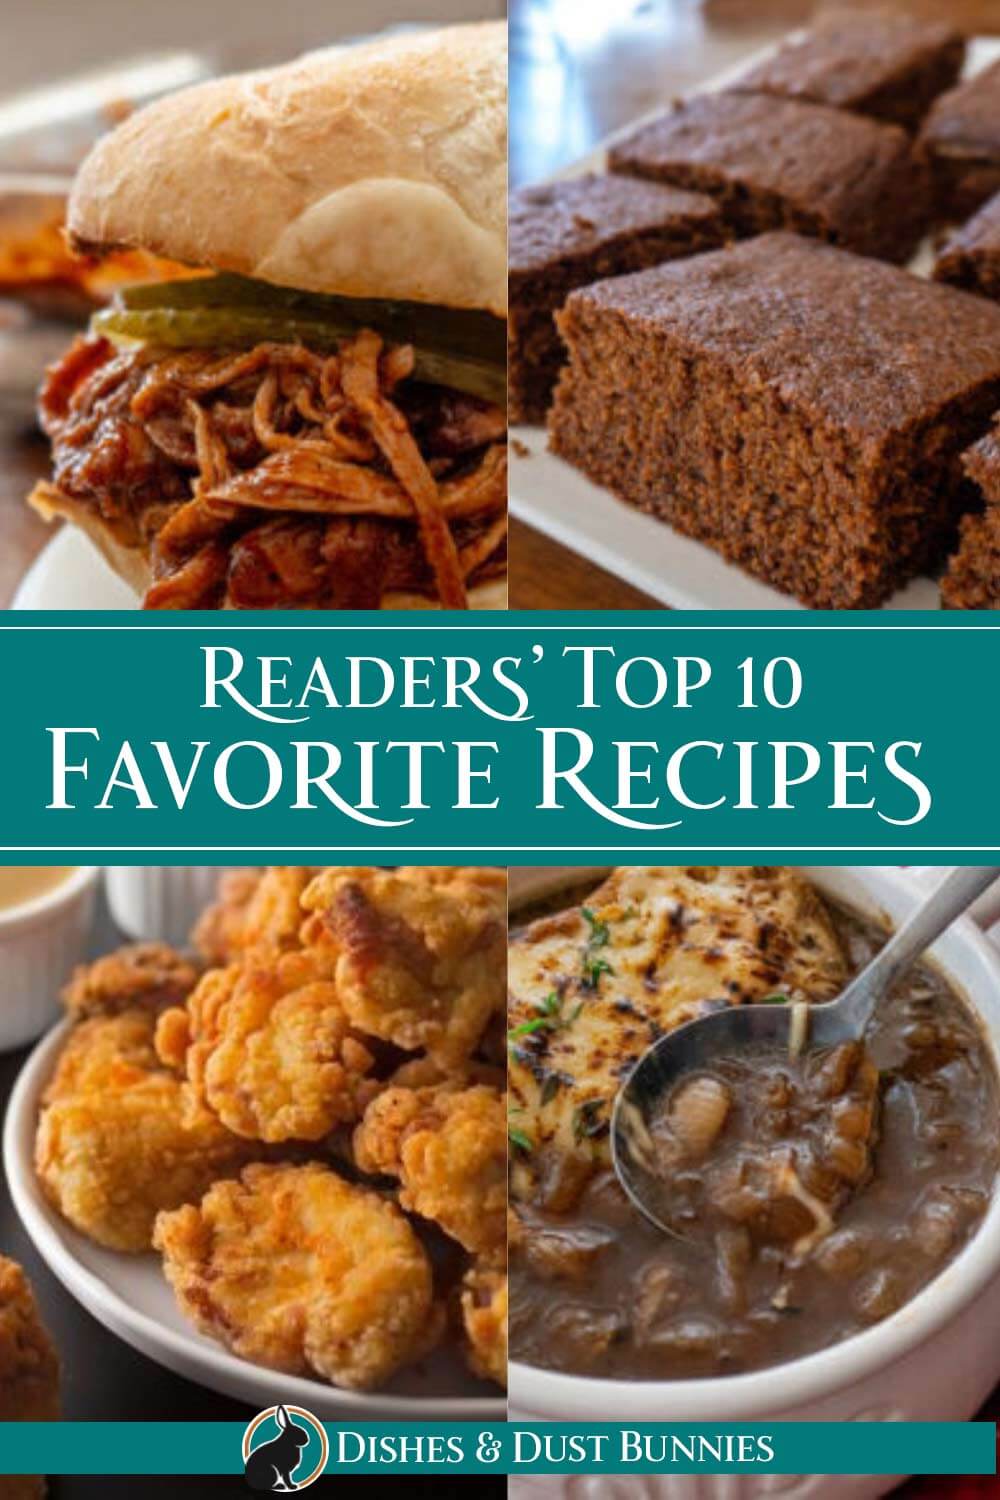 Top 10 Readers' Favorite Recipes